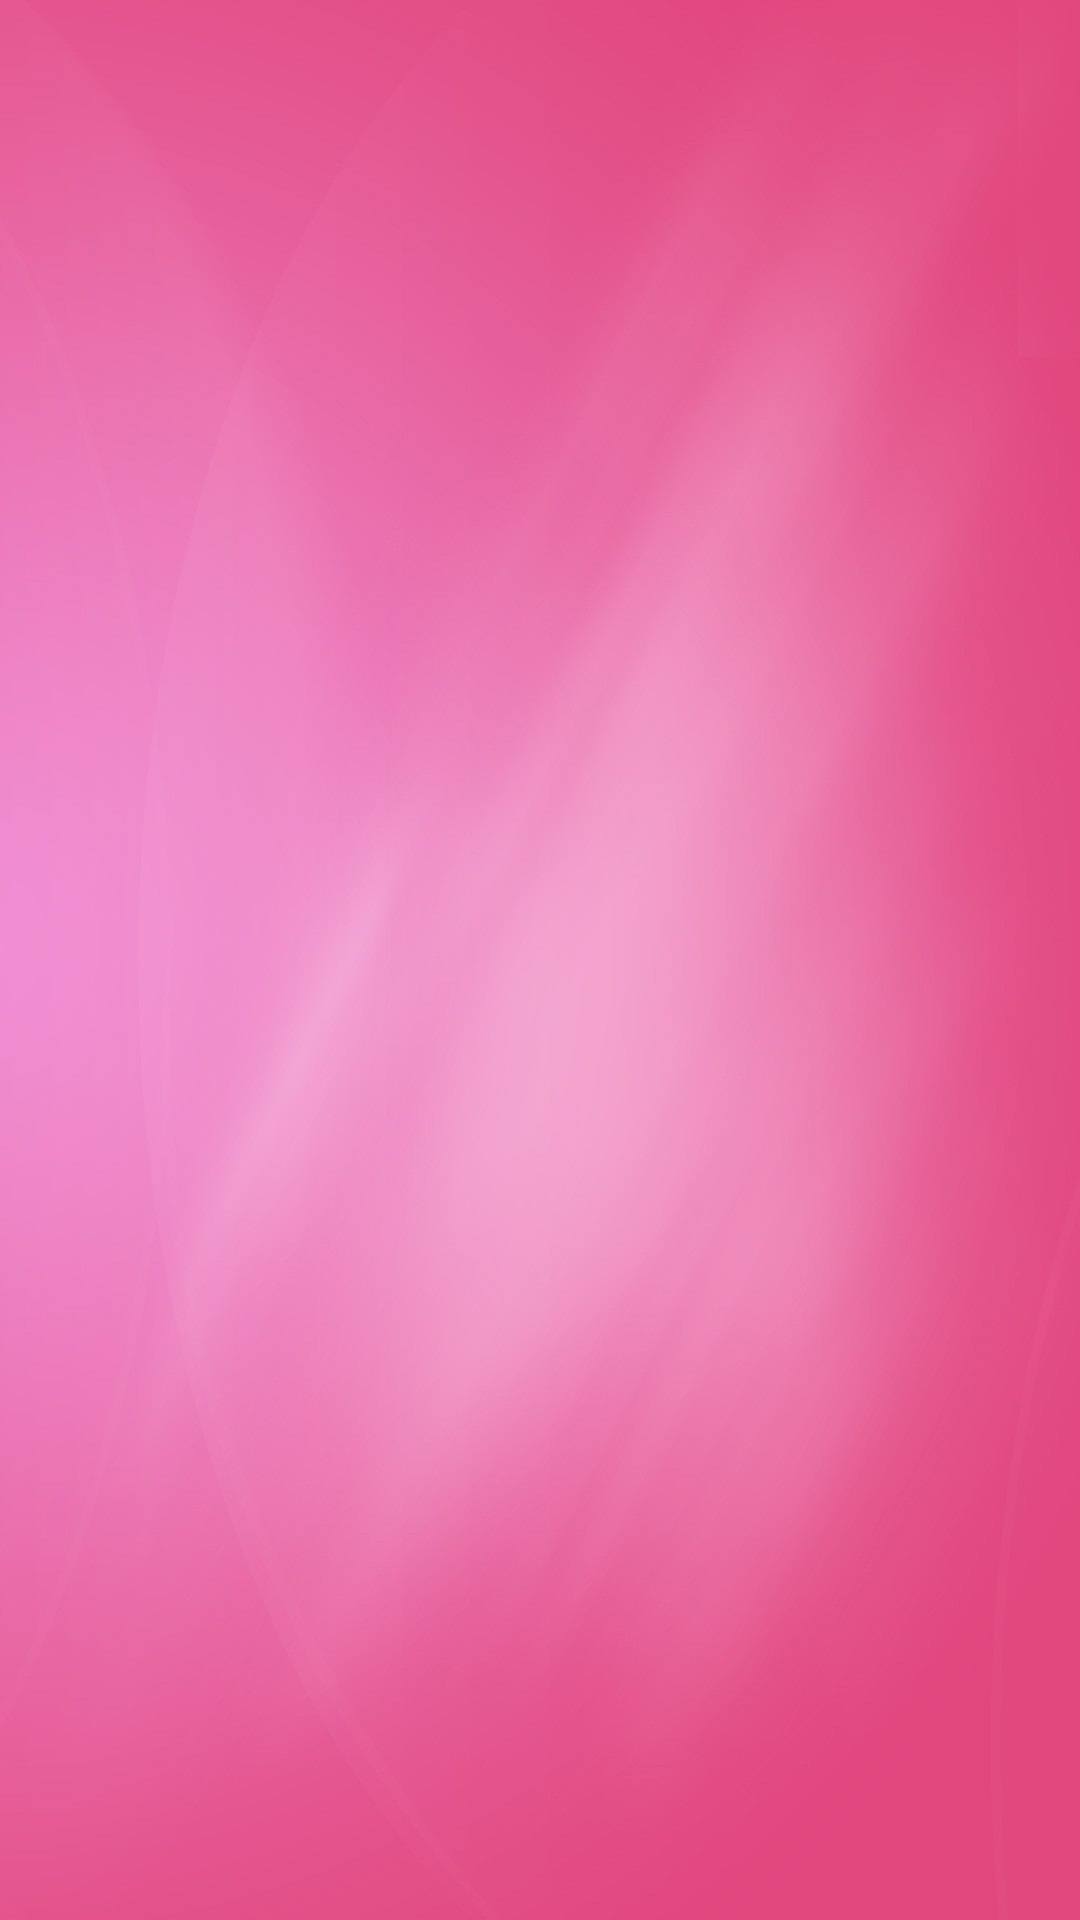 HD Pink iPhone Wallpaper resolution 1080x1920